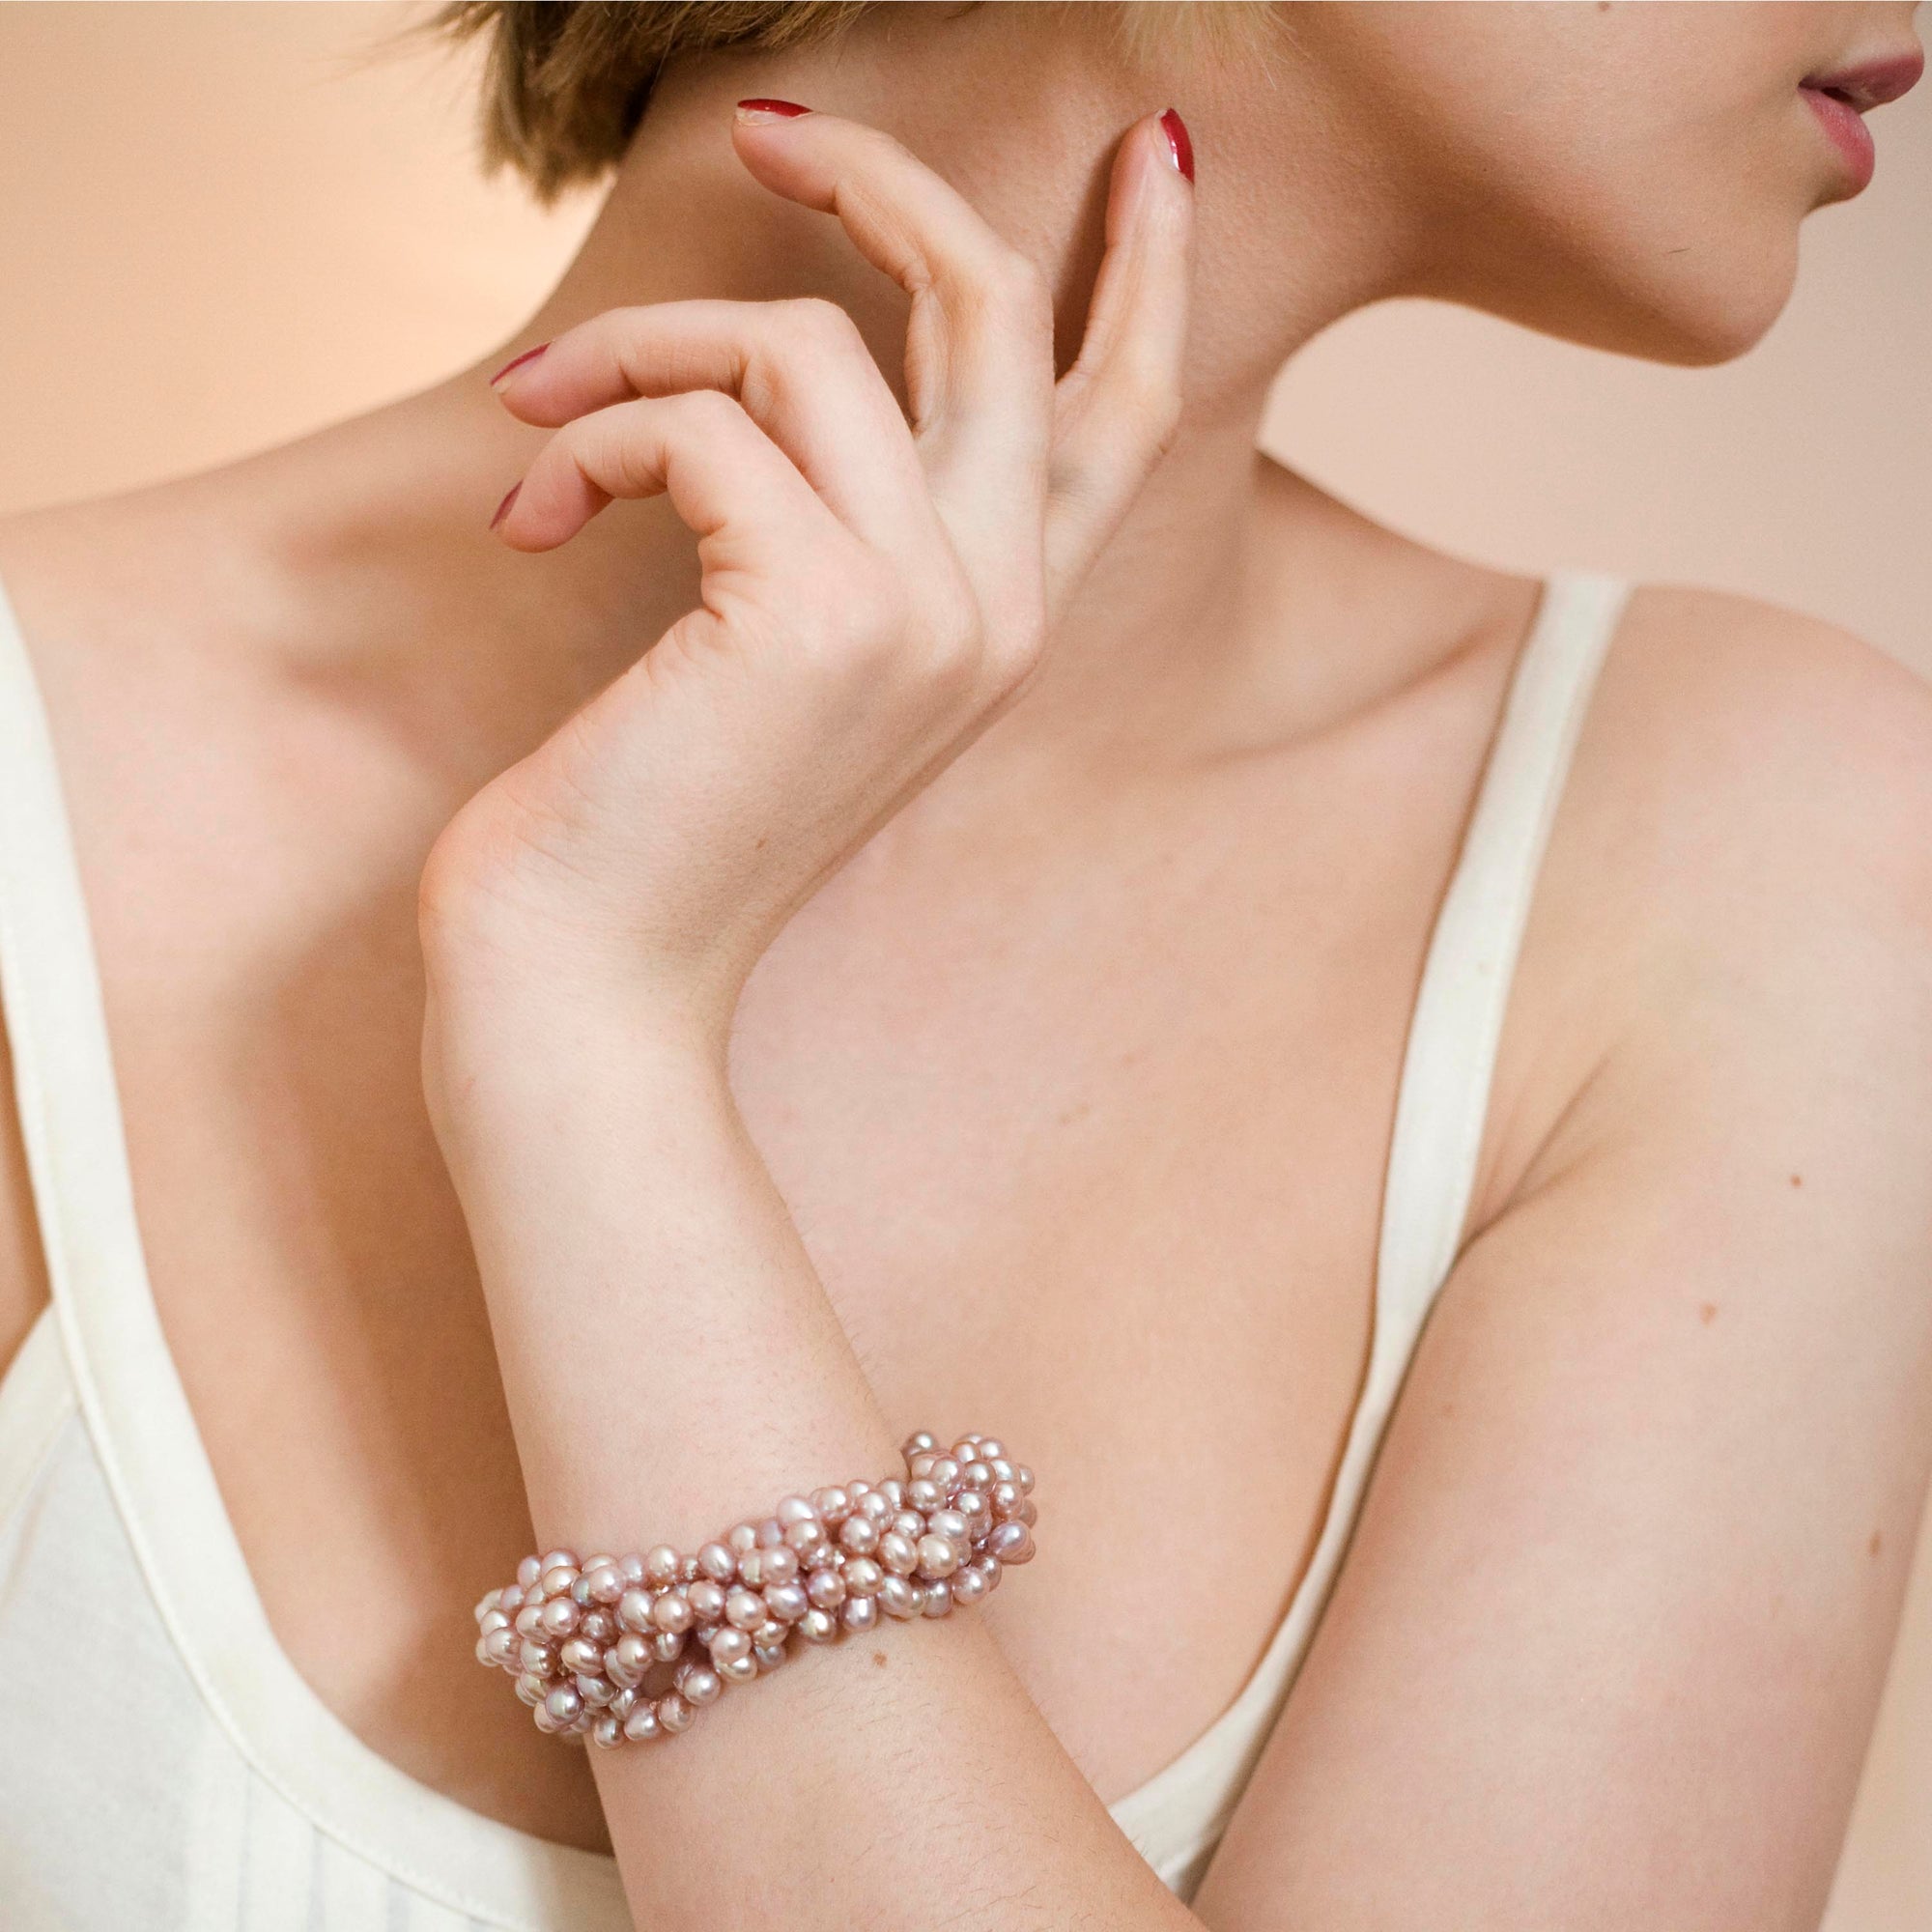 5 Strand Cultured Freshwater Pink Pearl Bracelet